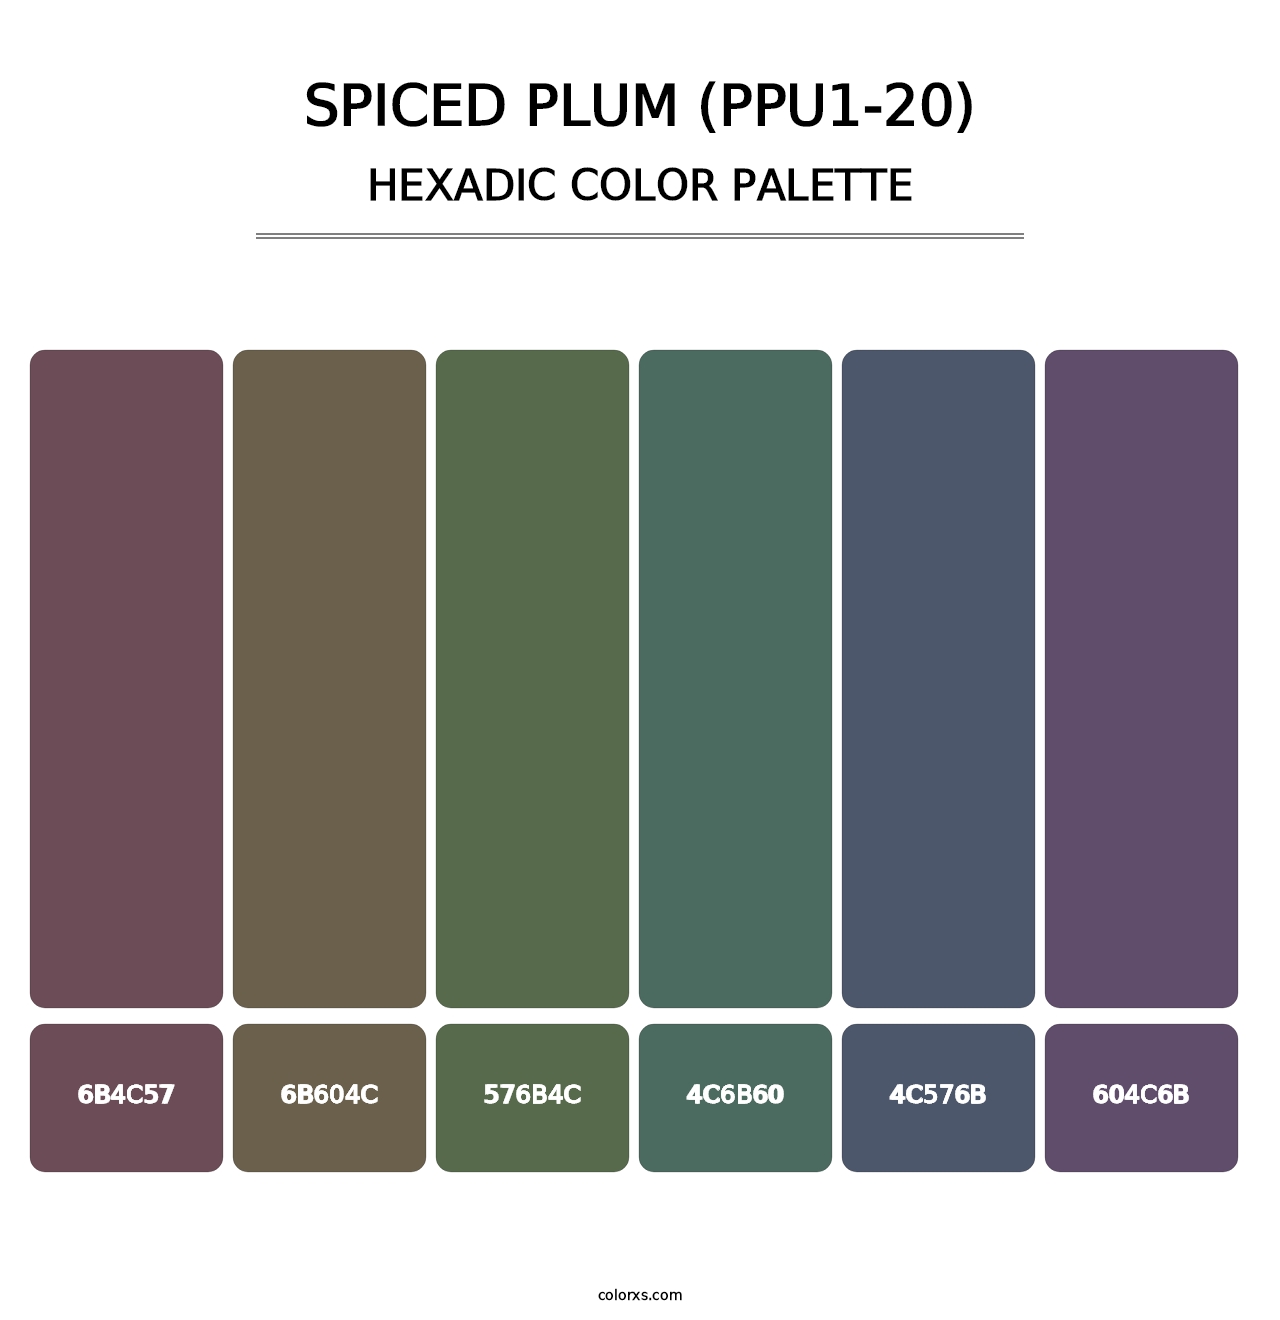 Spiced Plum (PPU1-20) - Hexadic Color Palette